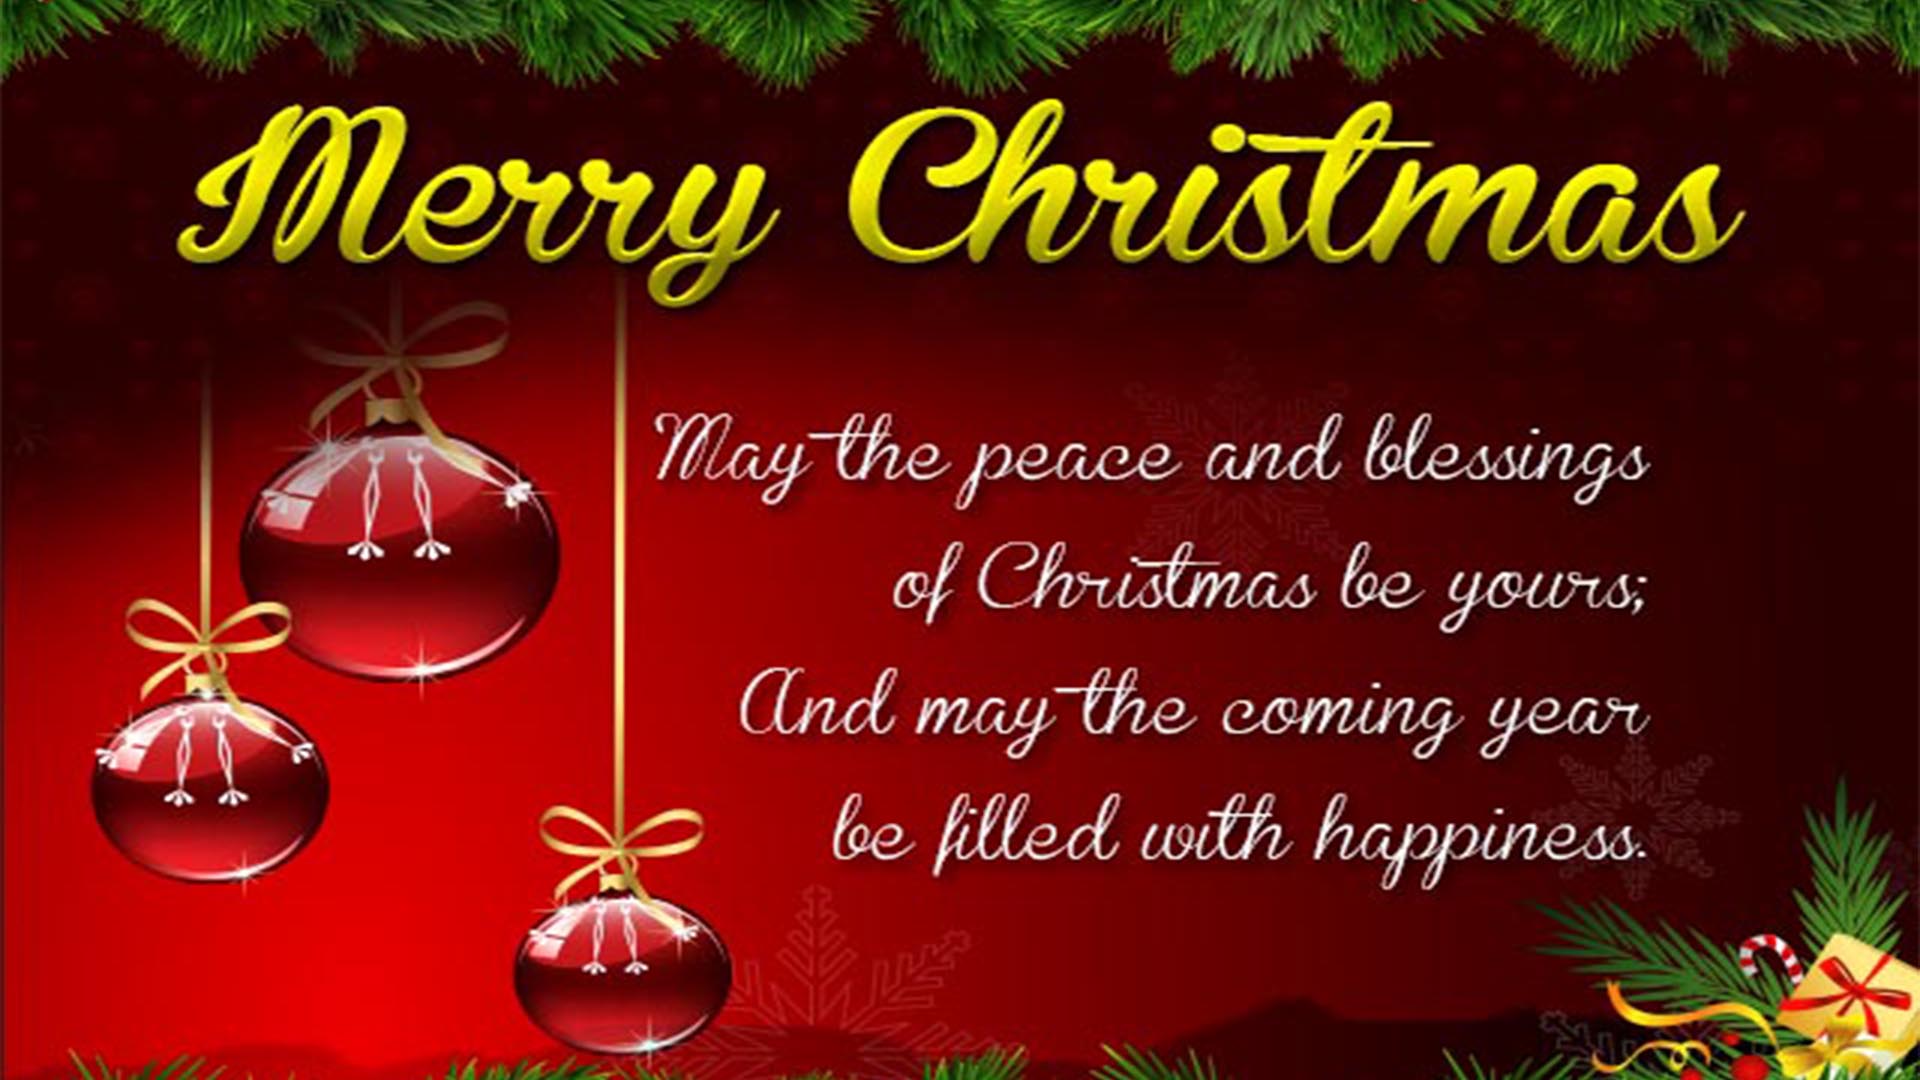 merry christmas greeting card hd image